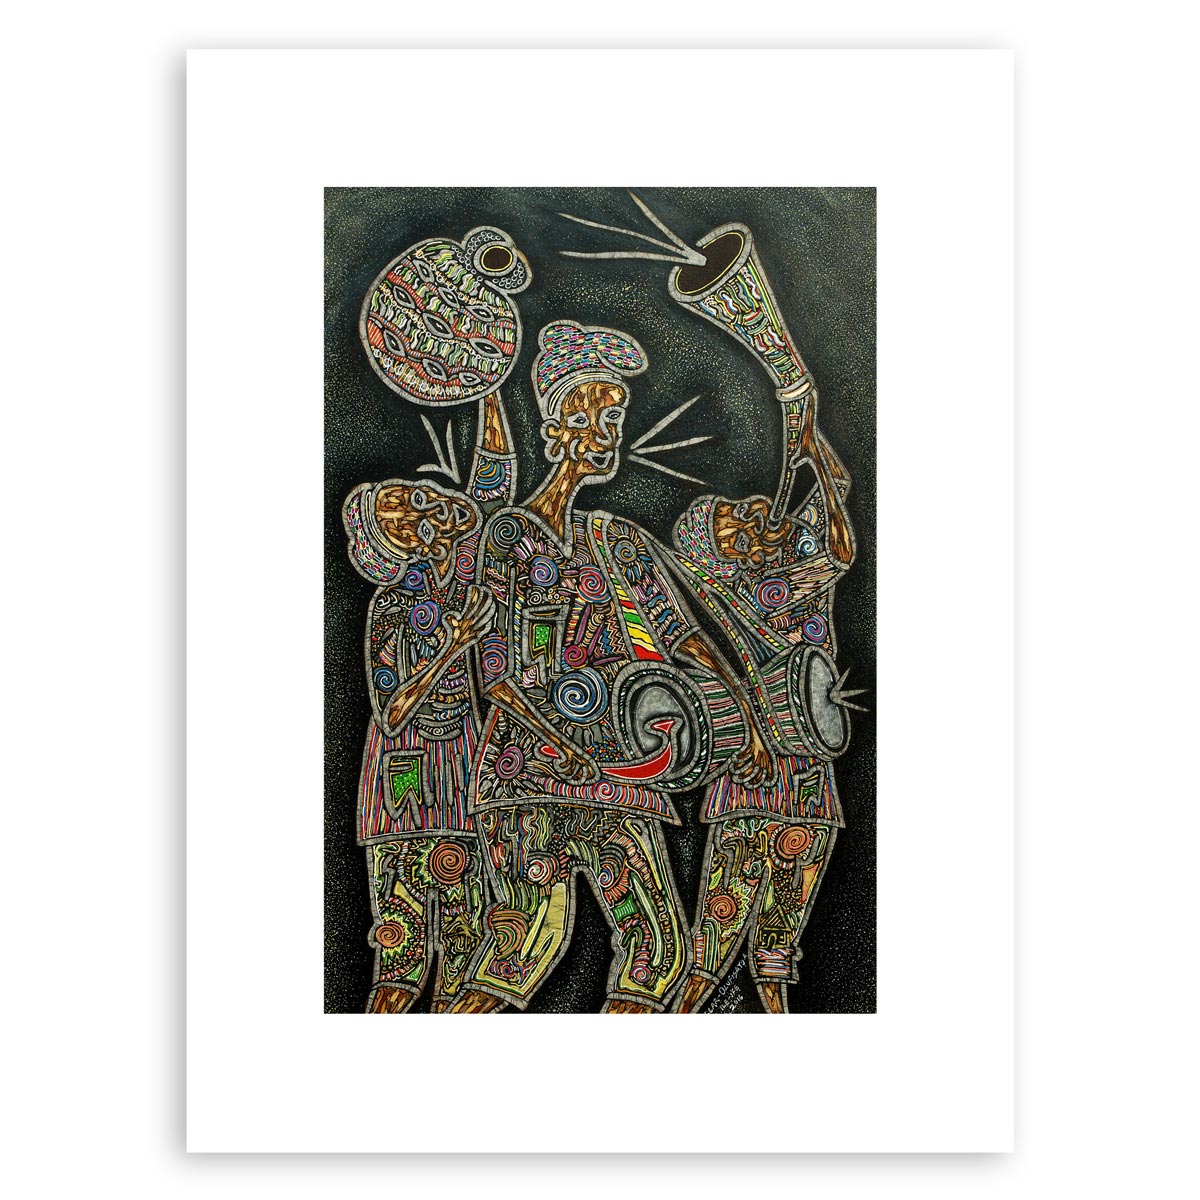 Yoruba Royal Procession: Onward to the Palace – art print inspired by Yoruba traditions